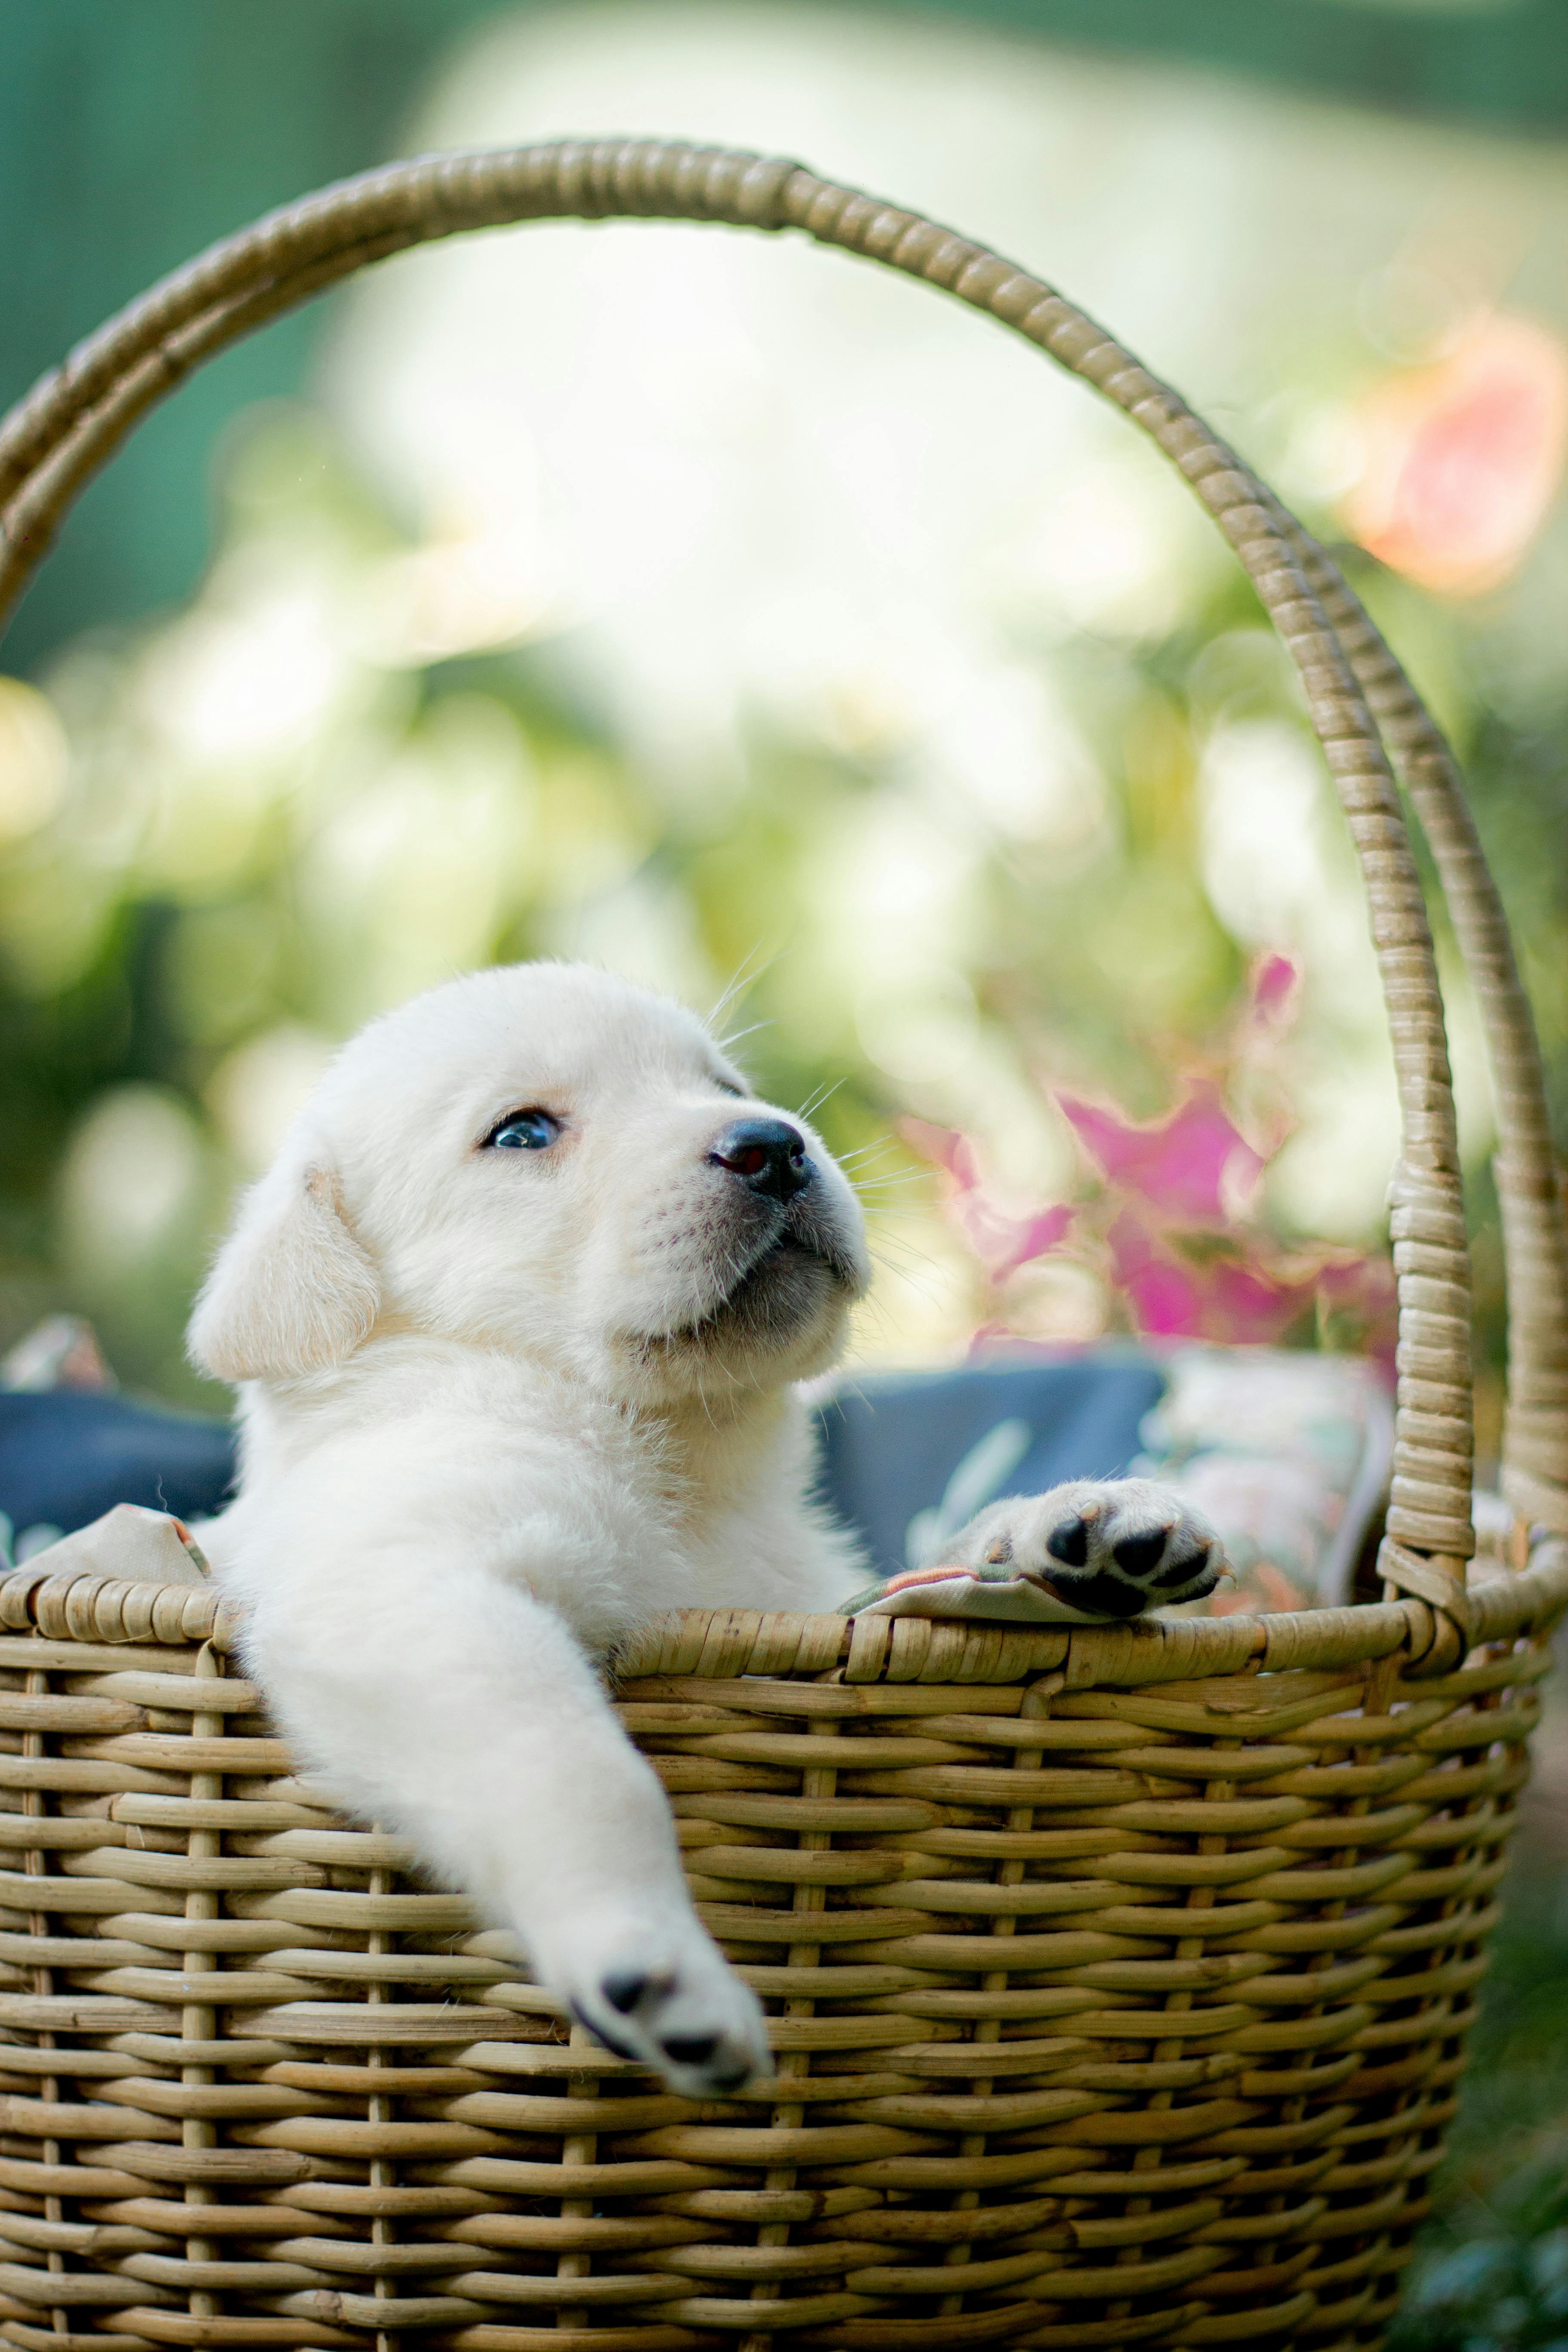 A labrador puppy in a woven basket | Source: Pexels